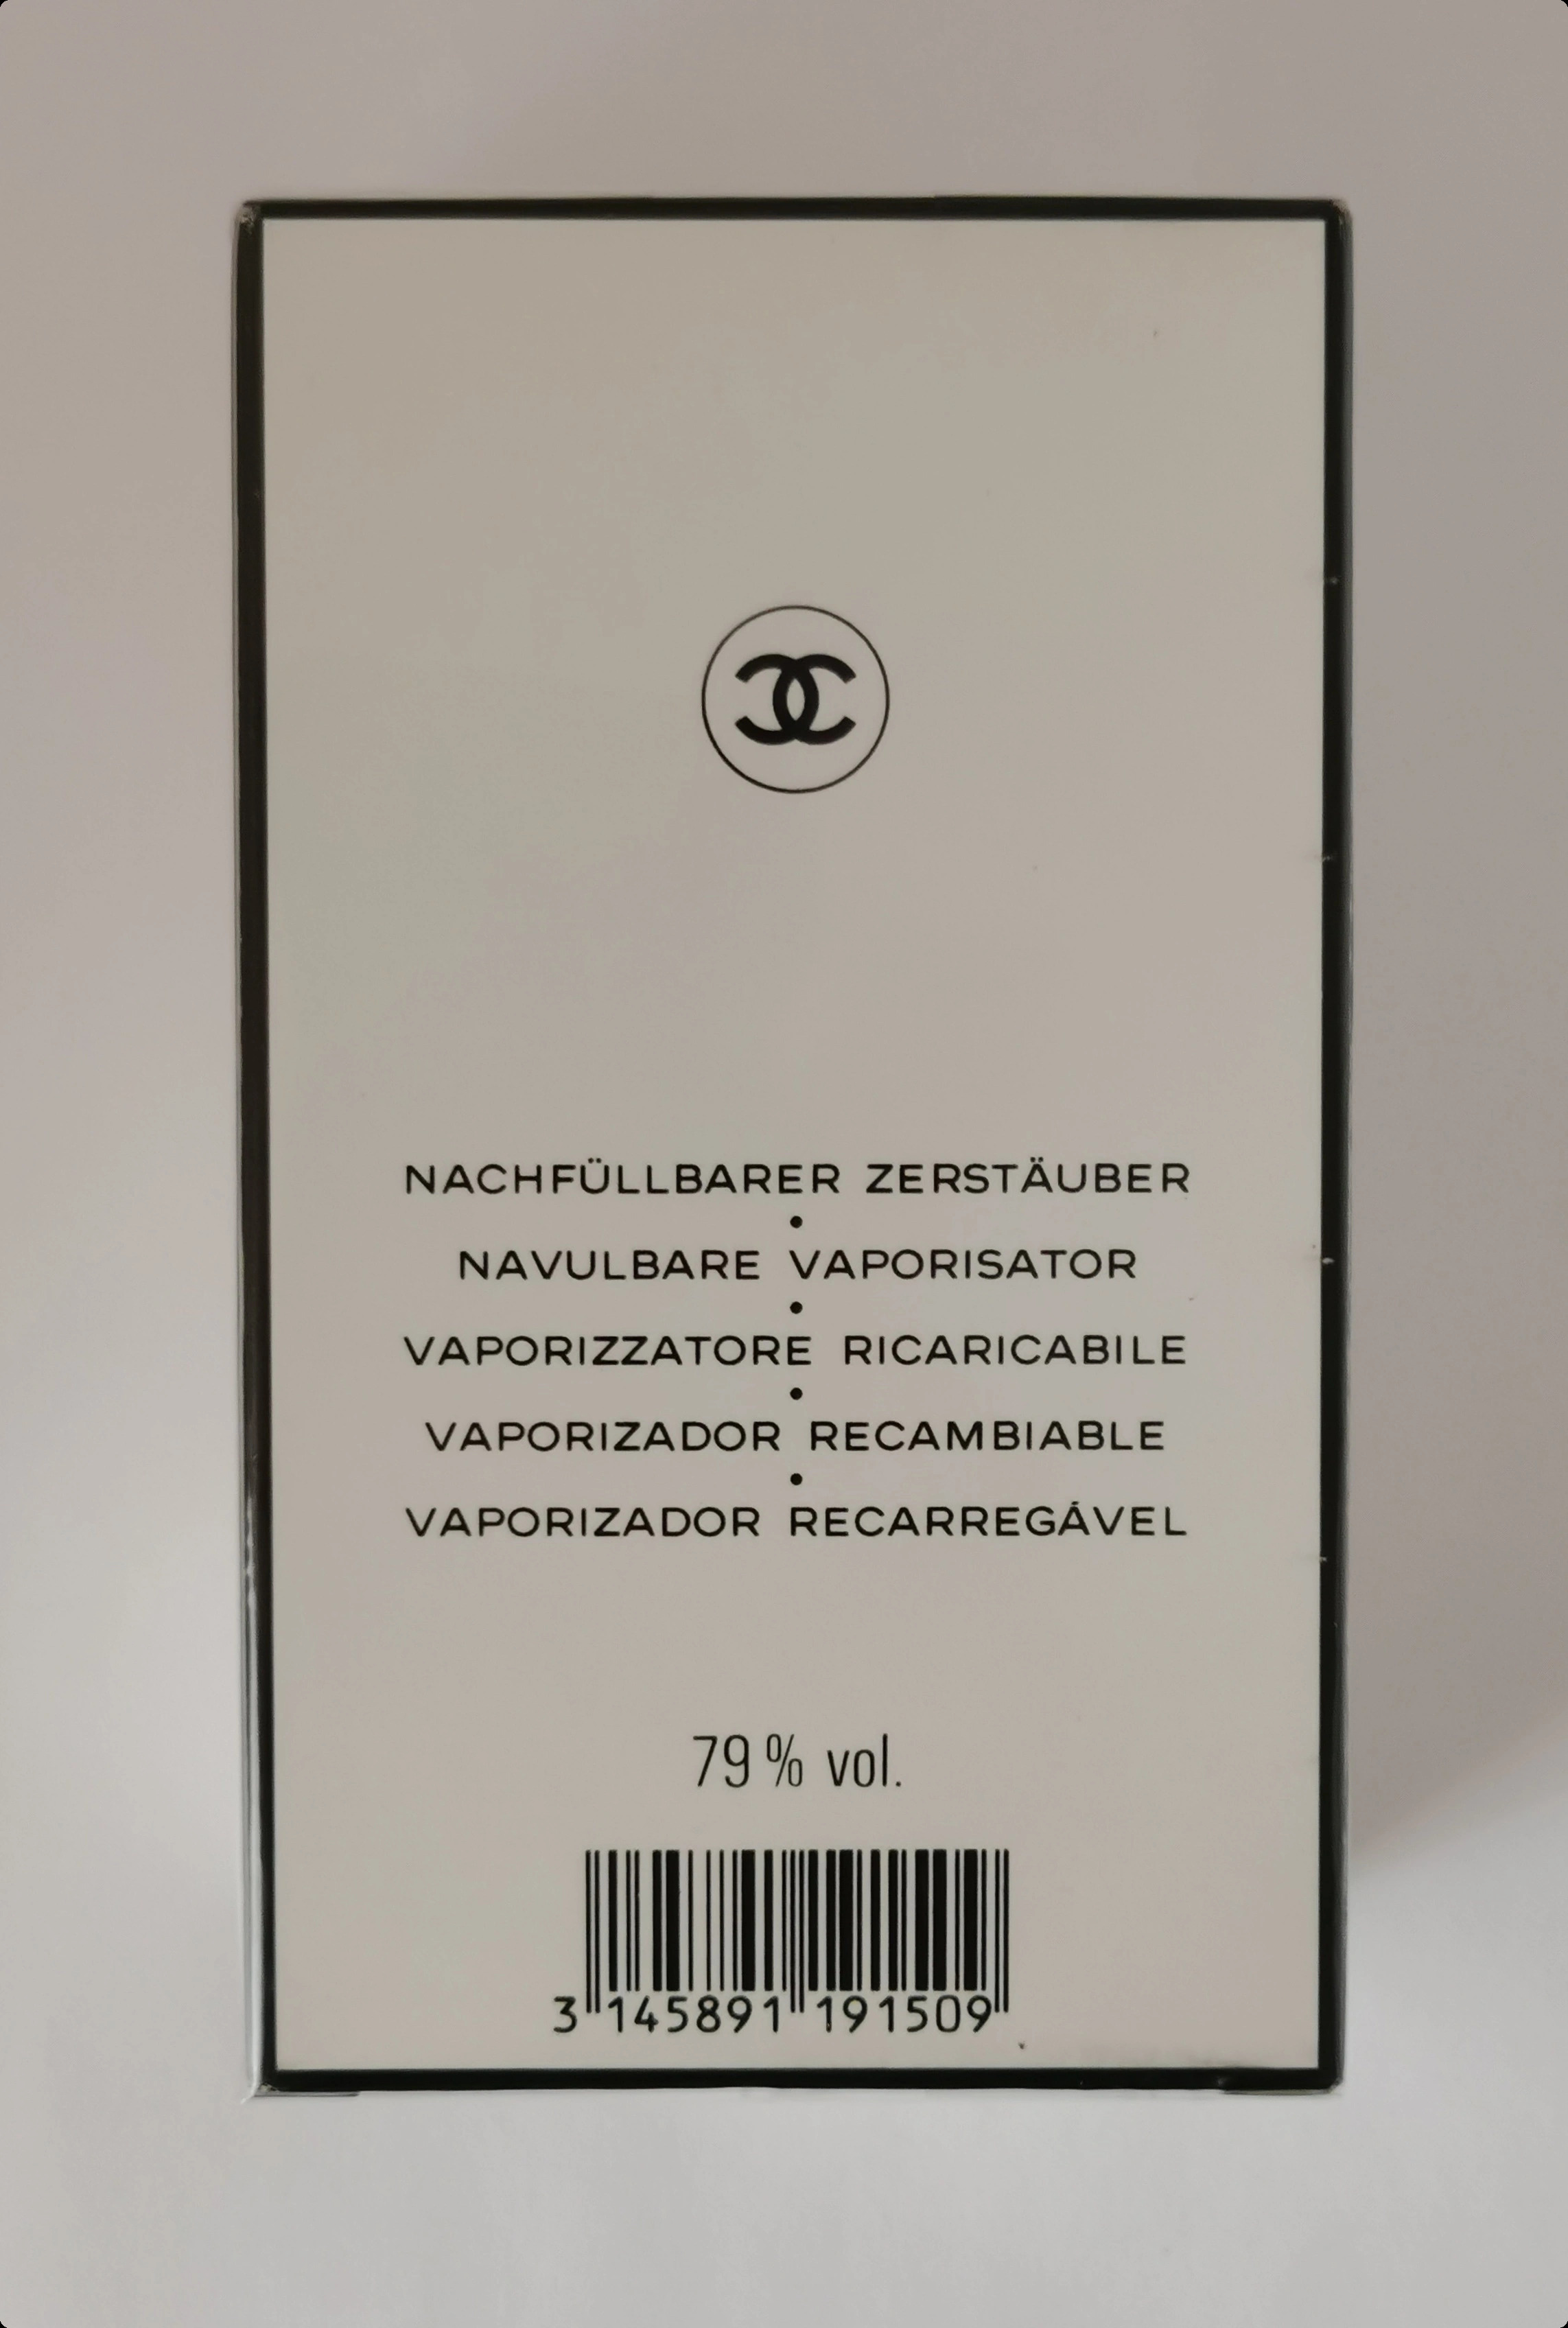 Chanel Chanel N19 Extrait Parfum Духи (со спреем) 7.5 мл для женщин